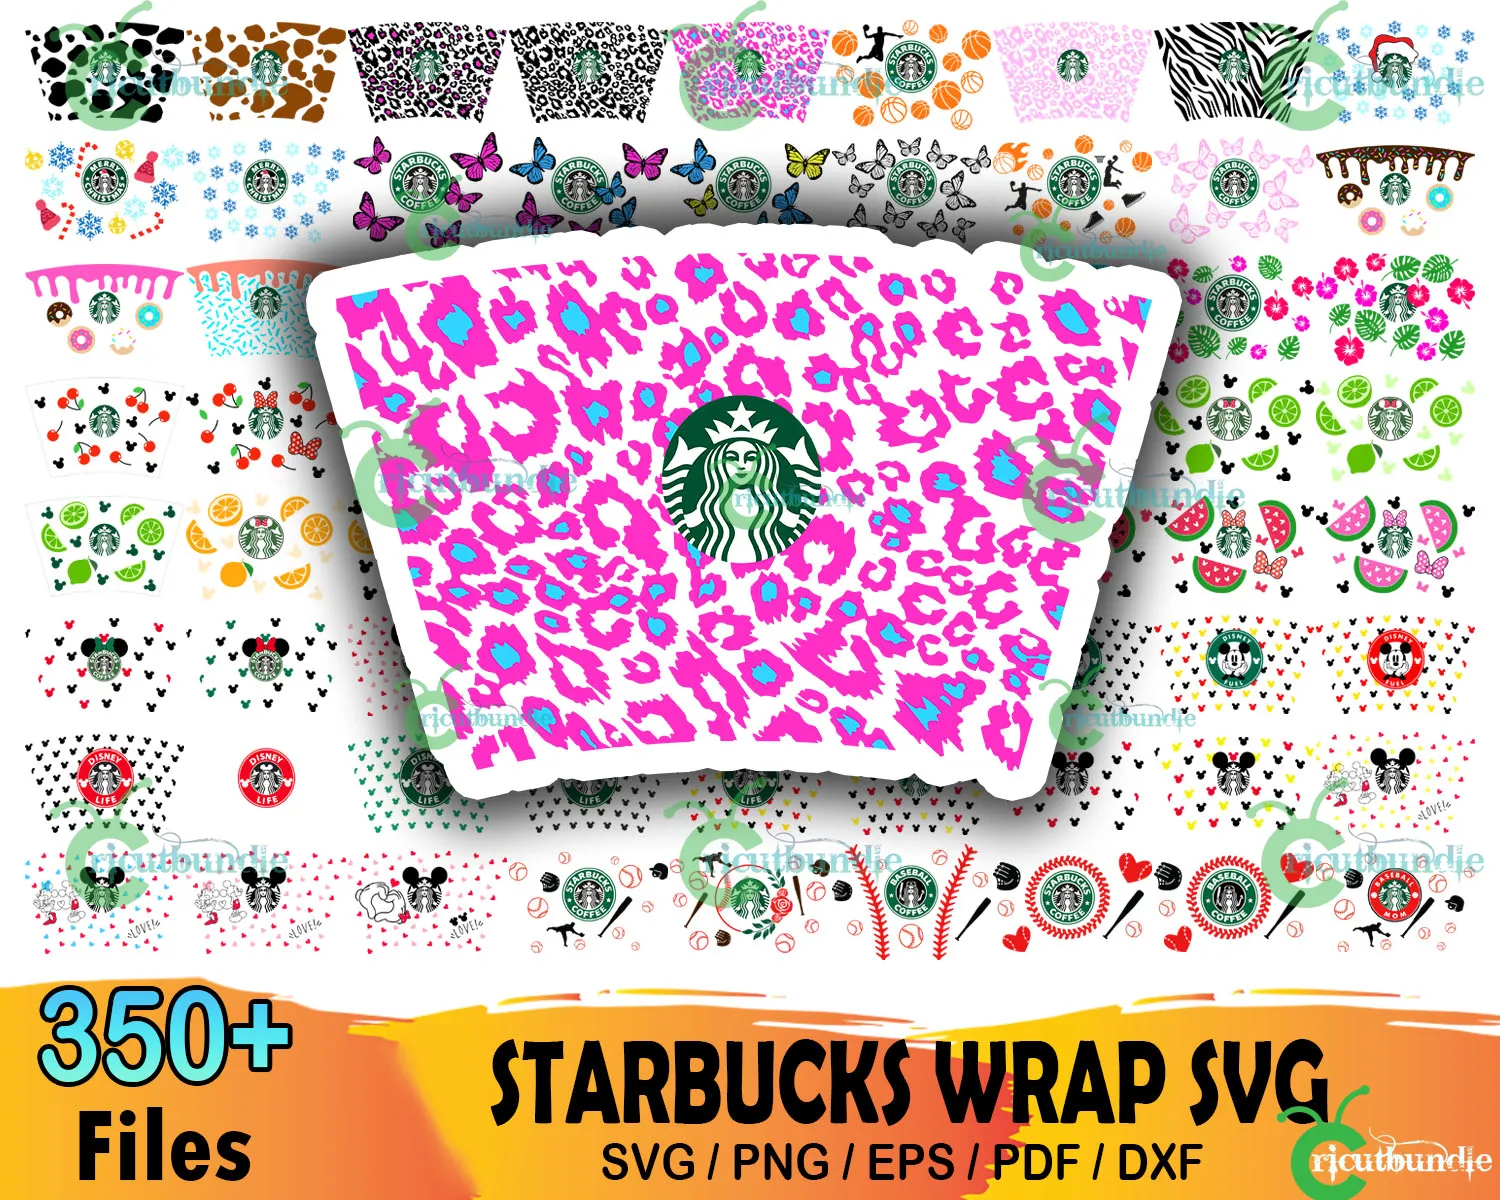 Supreme Starbuck Wrap Svg, Supreme LV Svg, Starbuck Wrap Svg